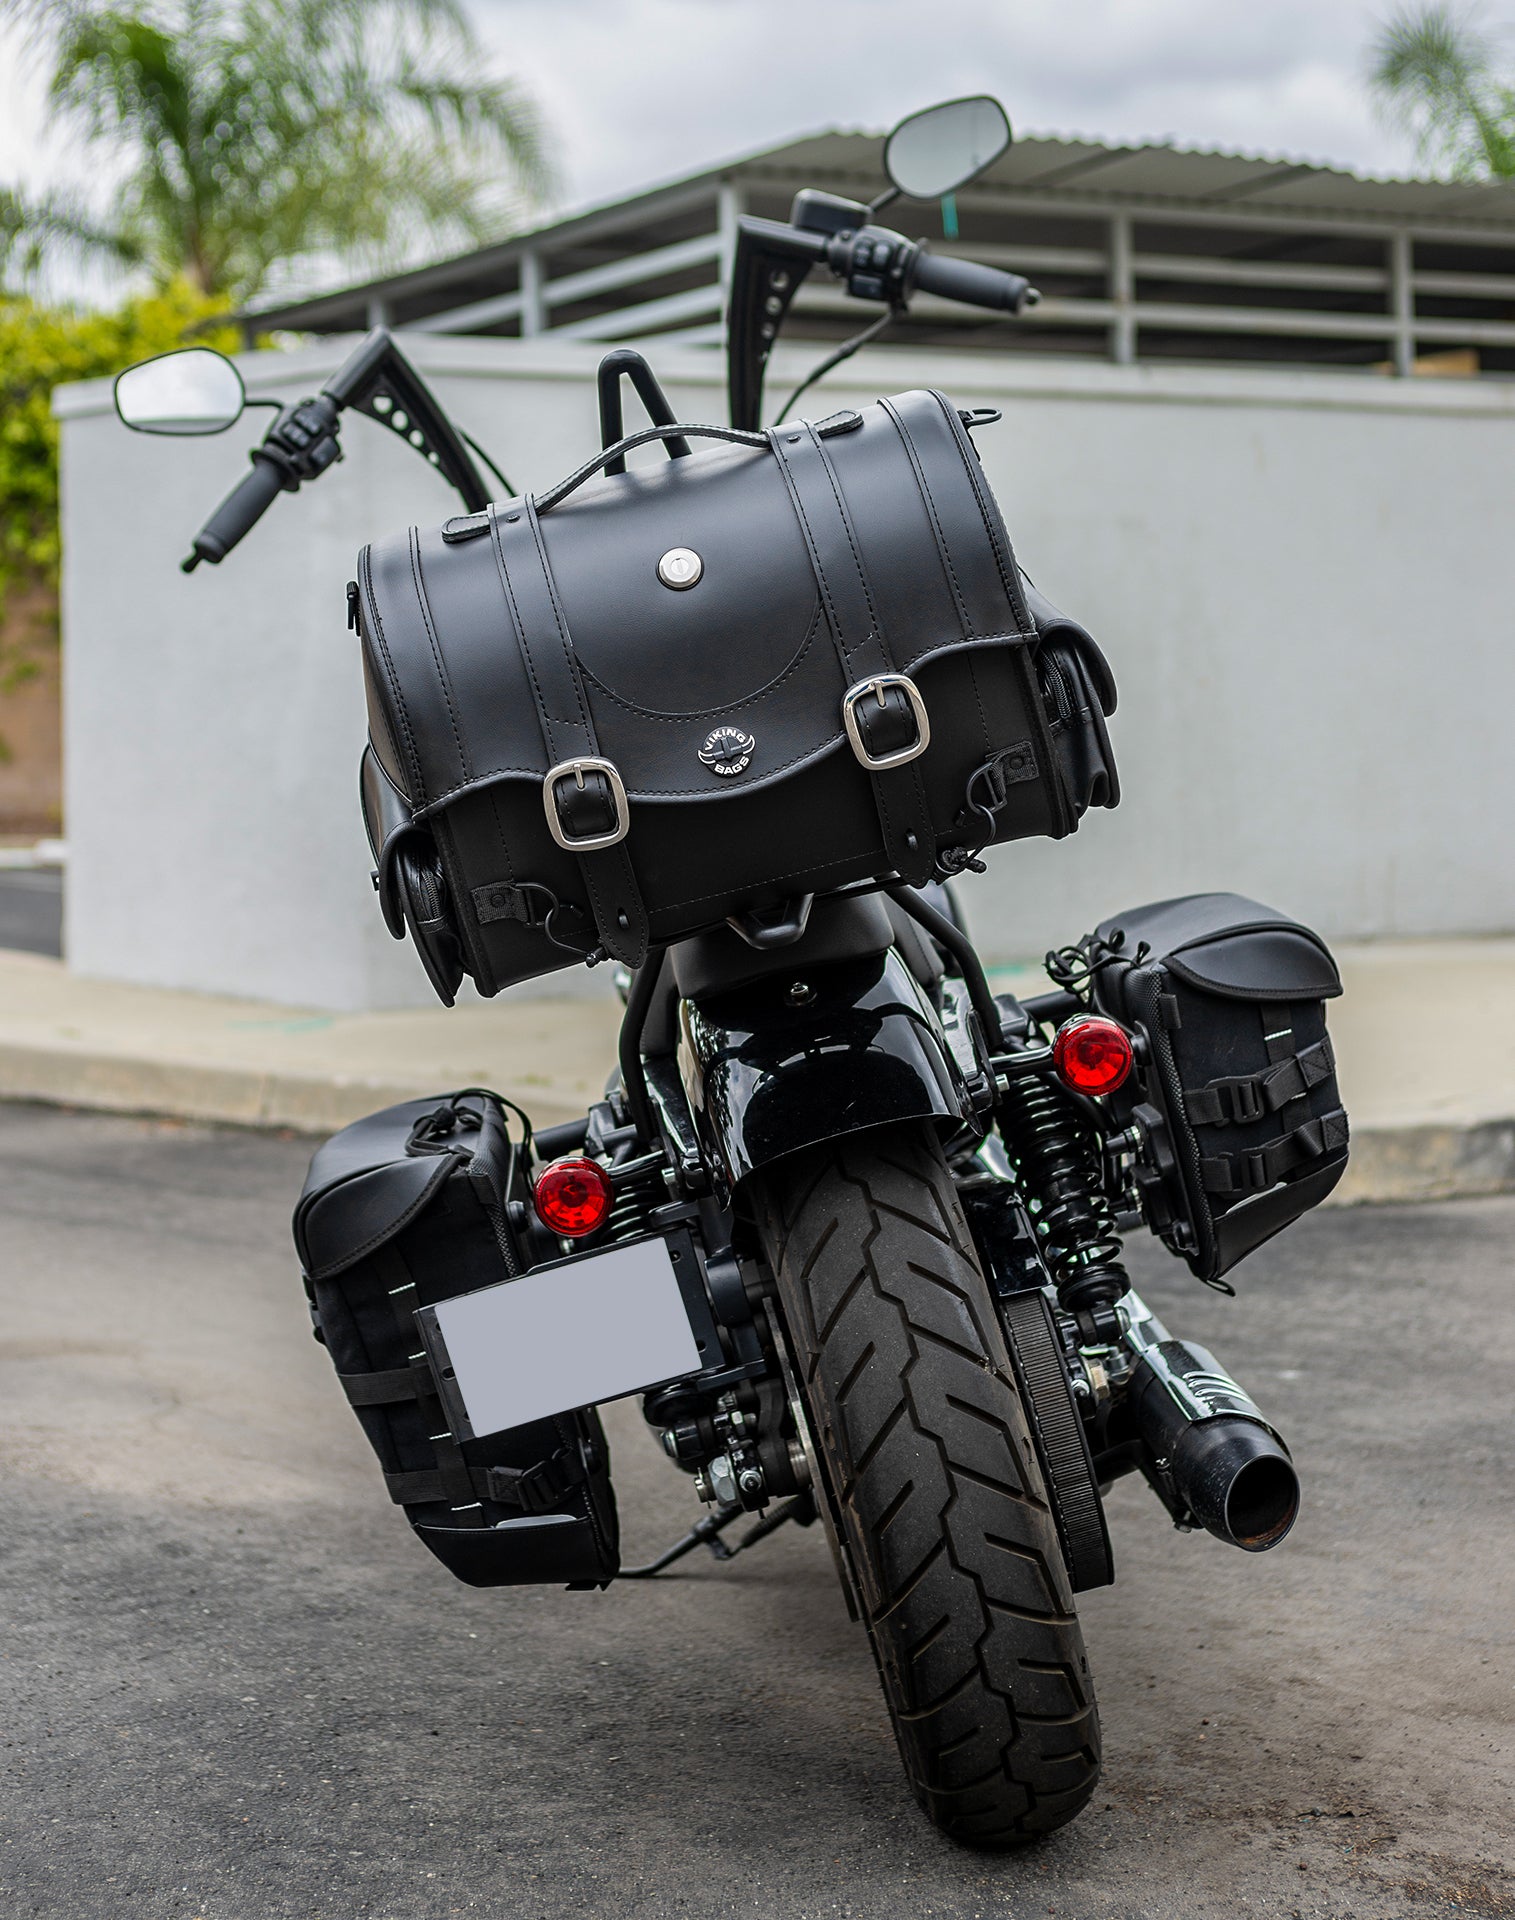 18L - Century Medium Yamaha Leather Motorcycle Trunk Bag